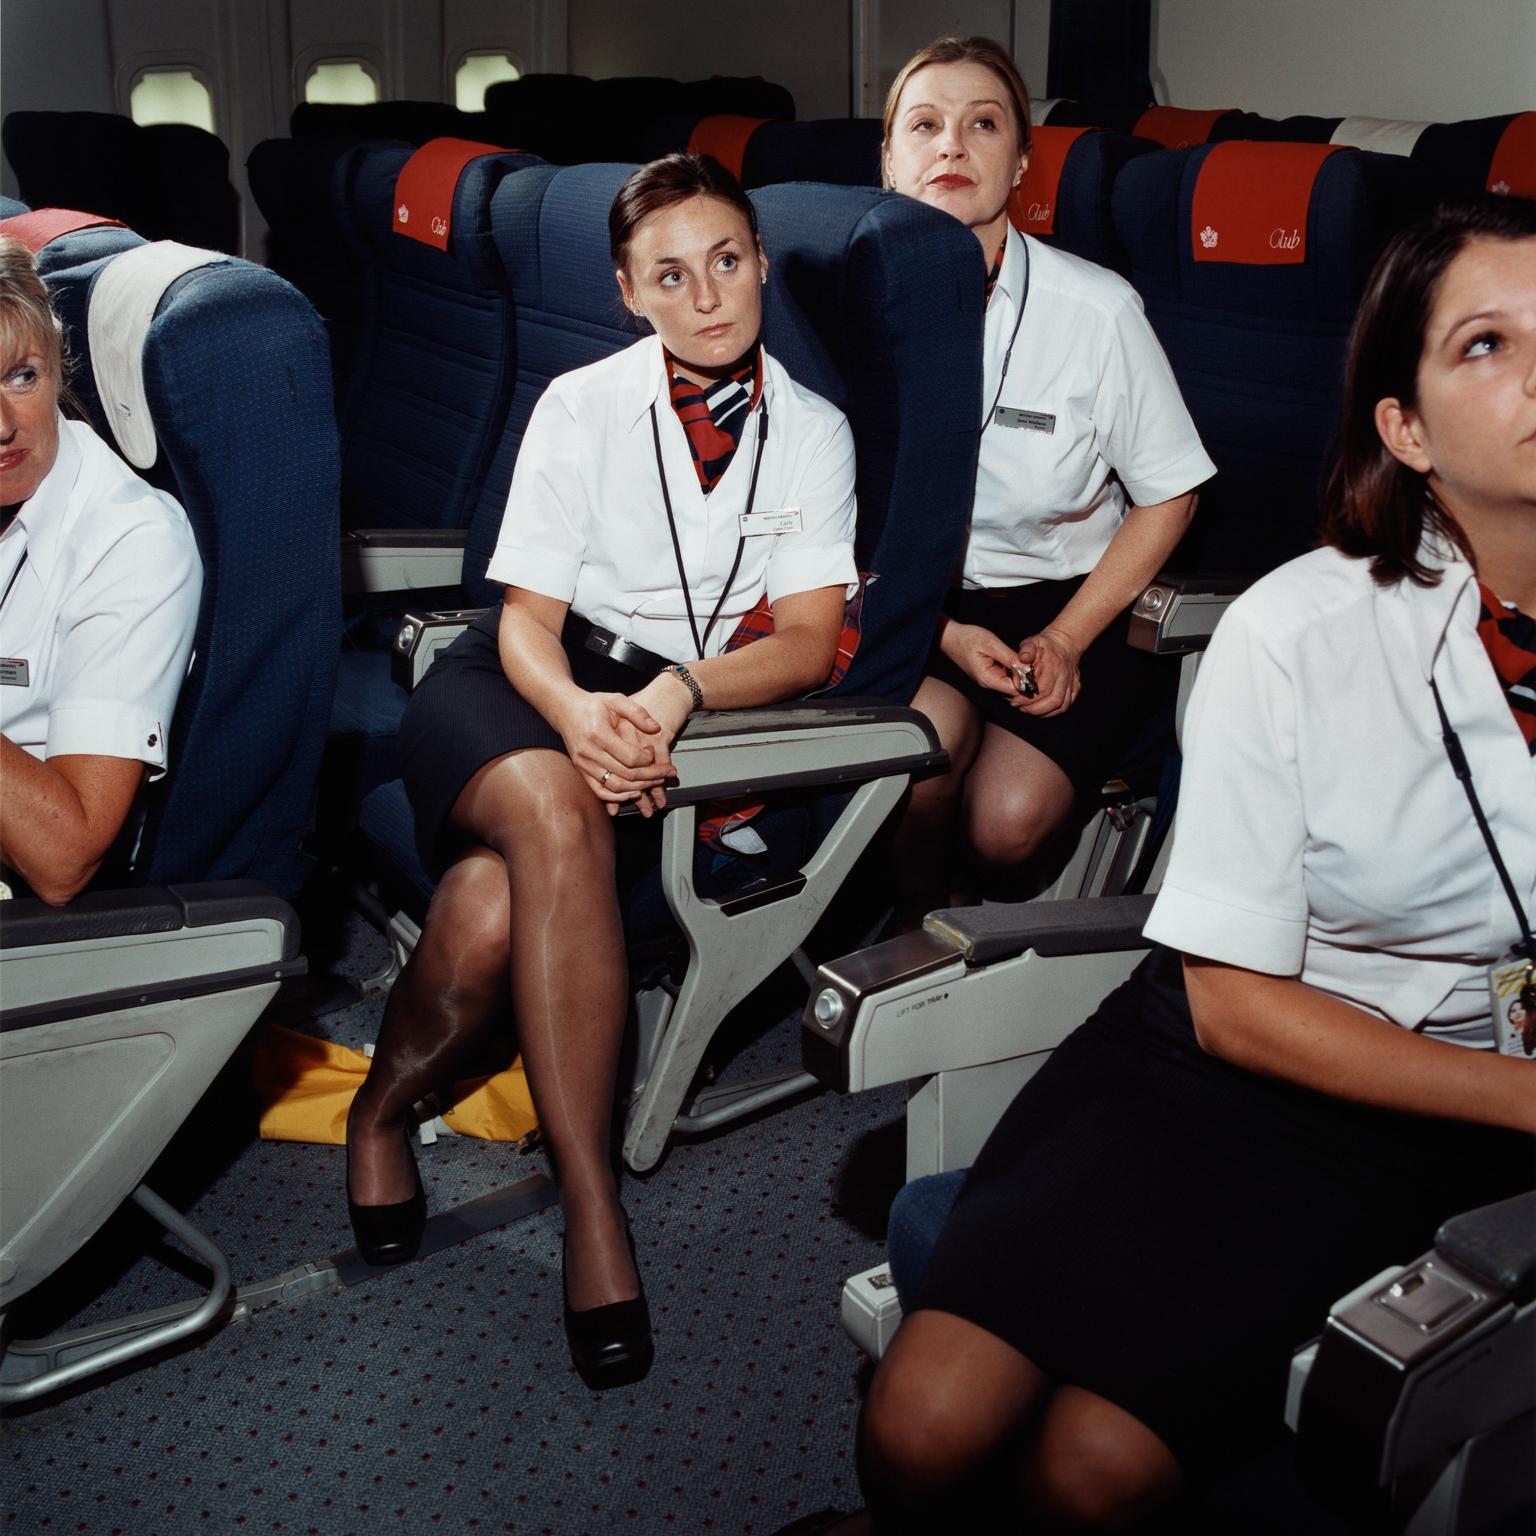 Brian Finke Figurative Photograph - Untitled (British Airways)